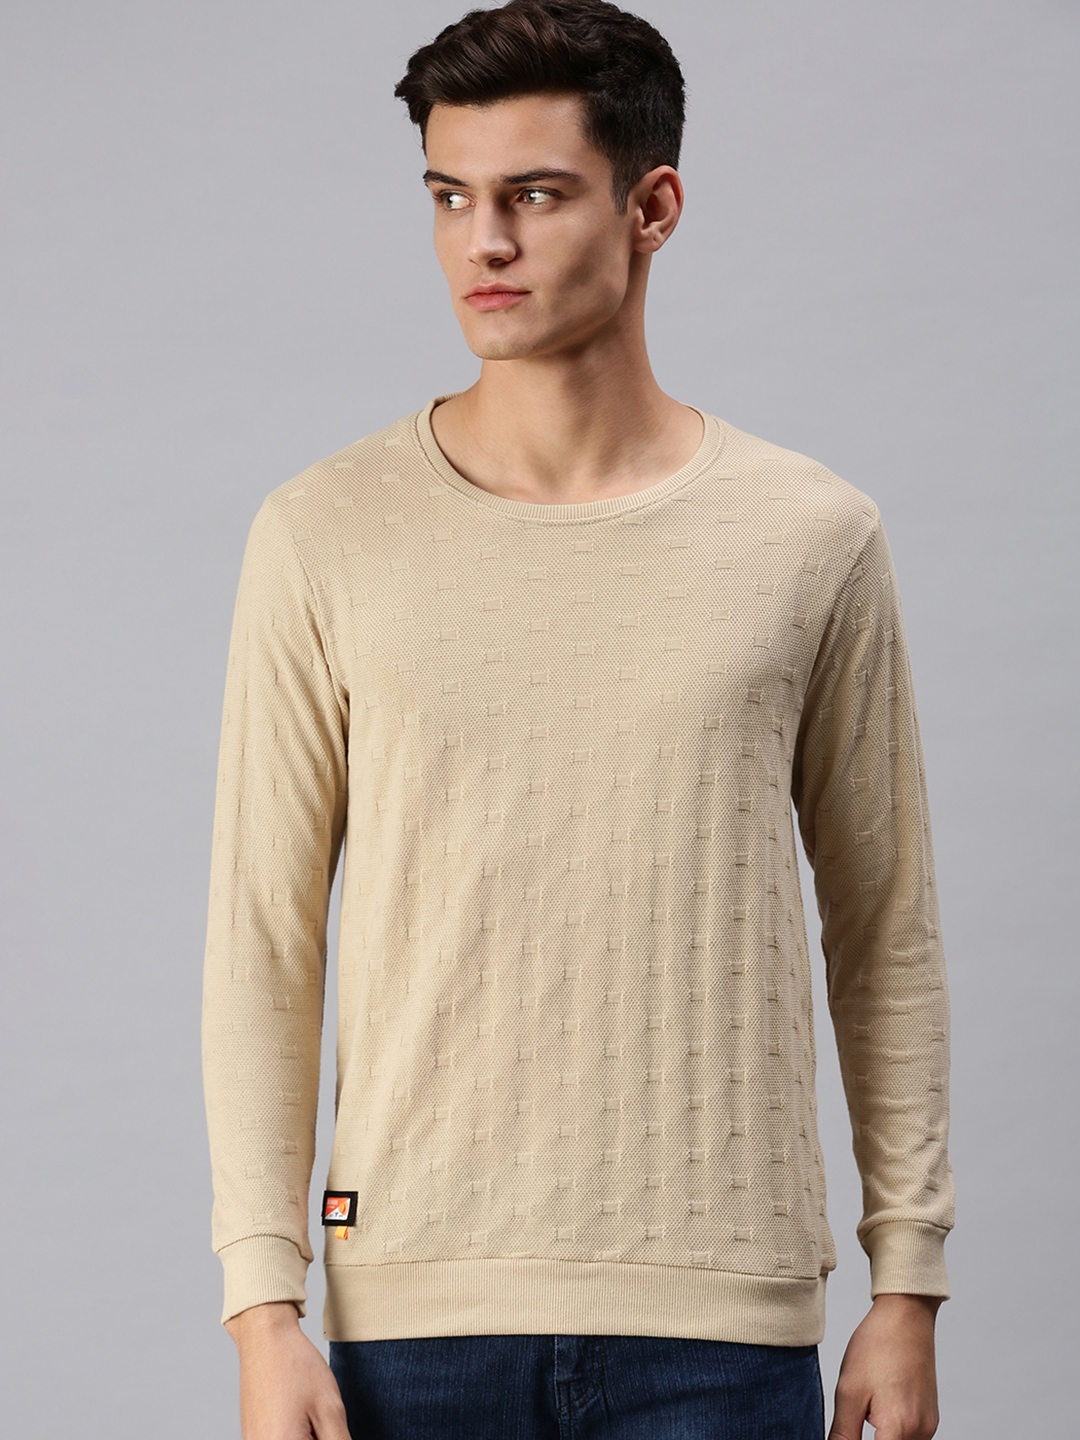 Men's Beige Cotton Solid Sweatshirts